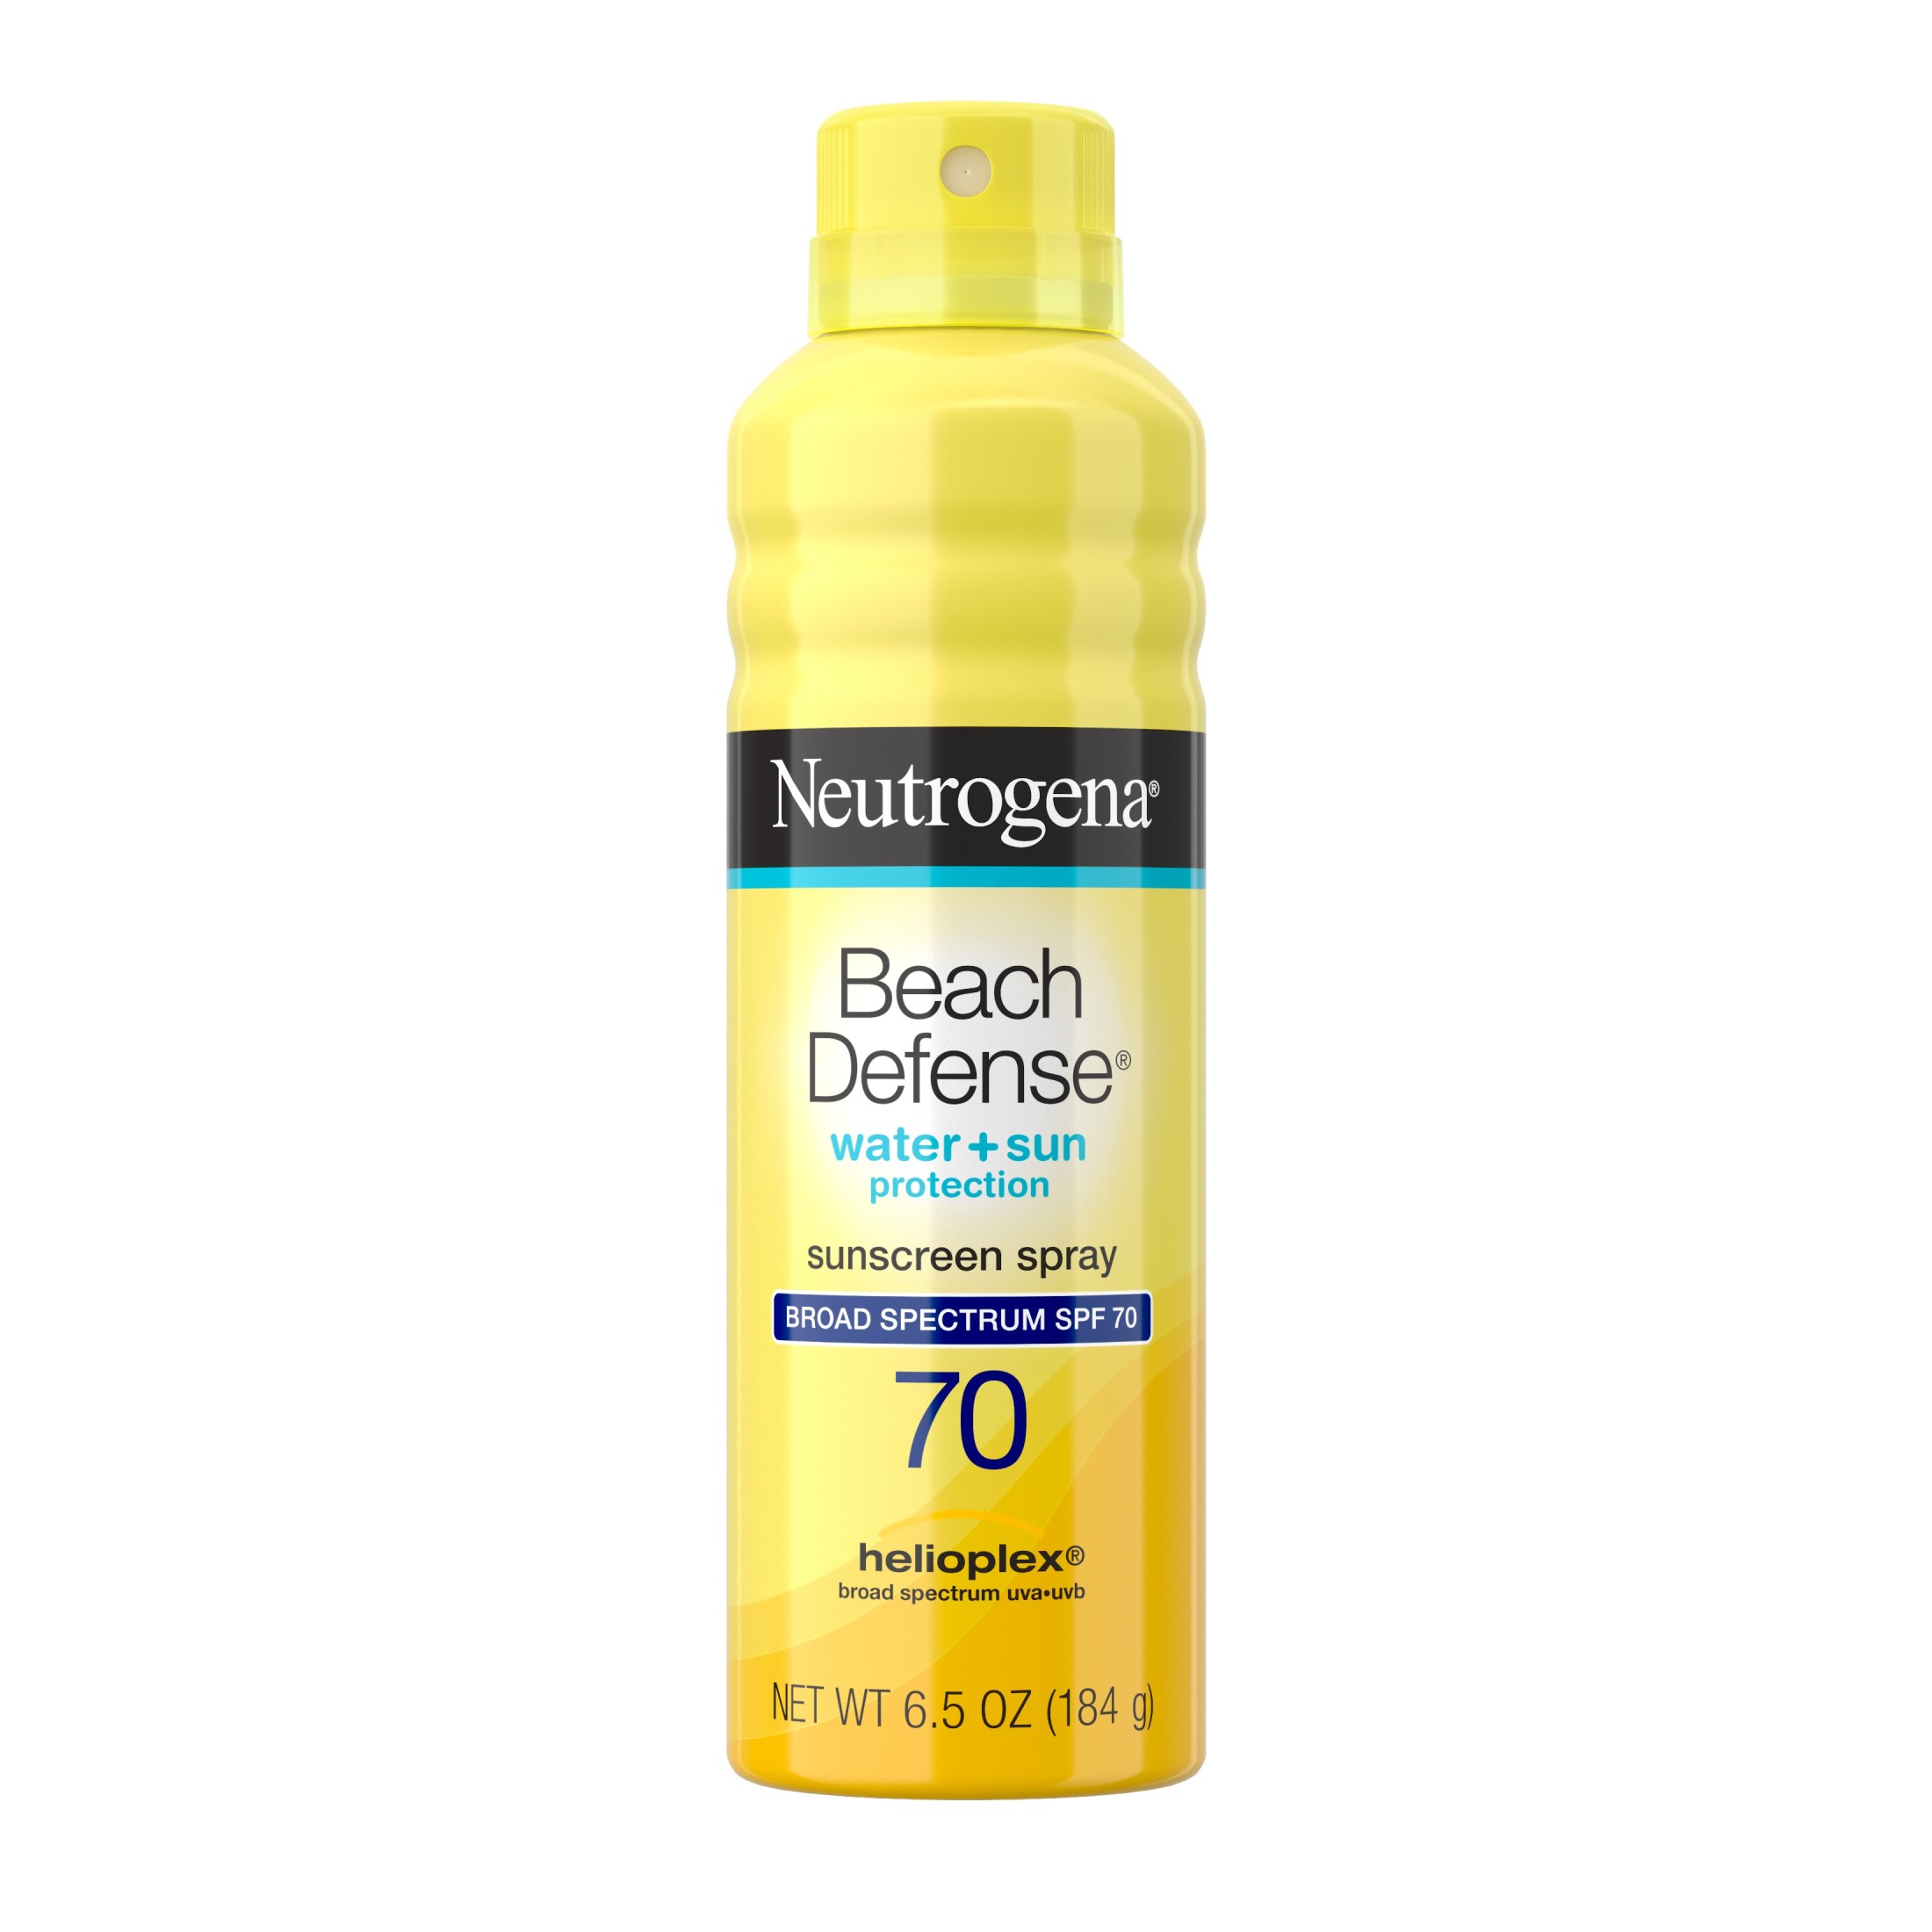 Neutrogena Beach Defense Oil-Free Body Sunscreen Spray, SPF 70 Sunblock, 6.5 oz - image 1 of 10